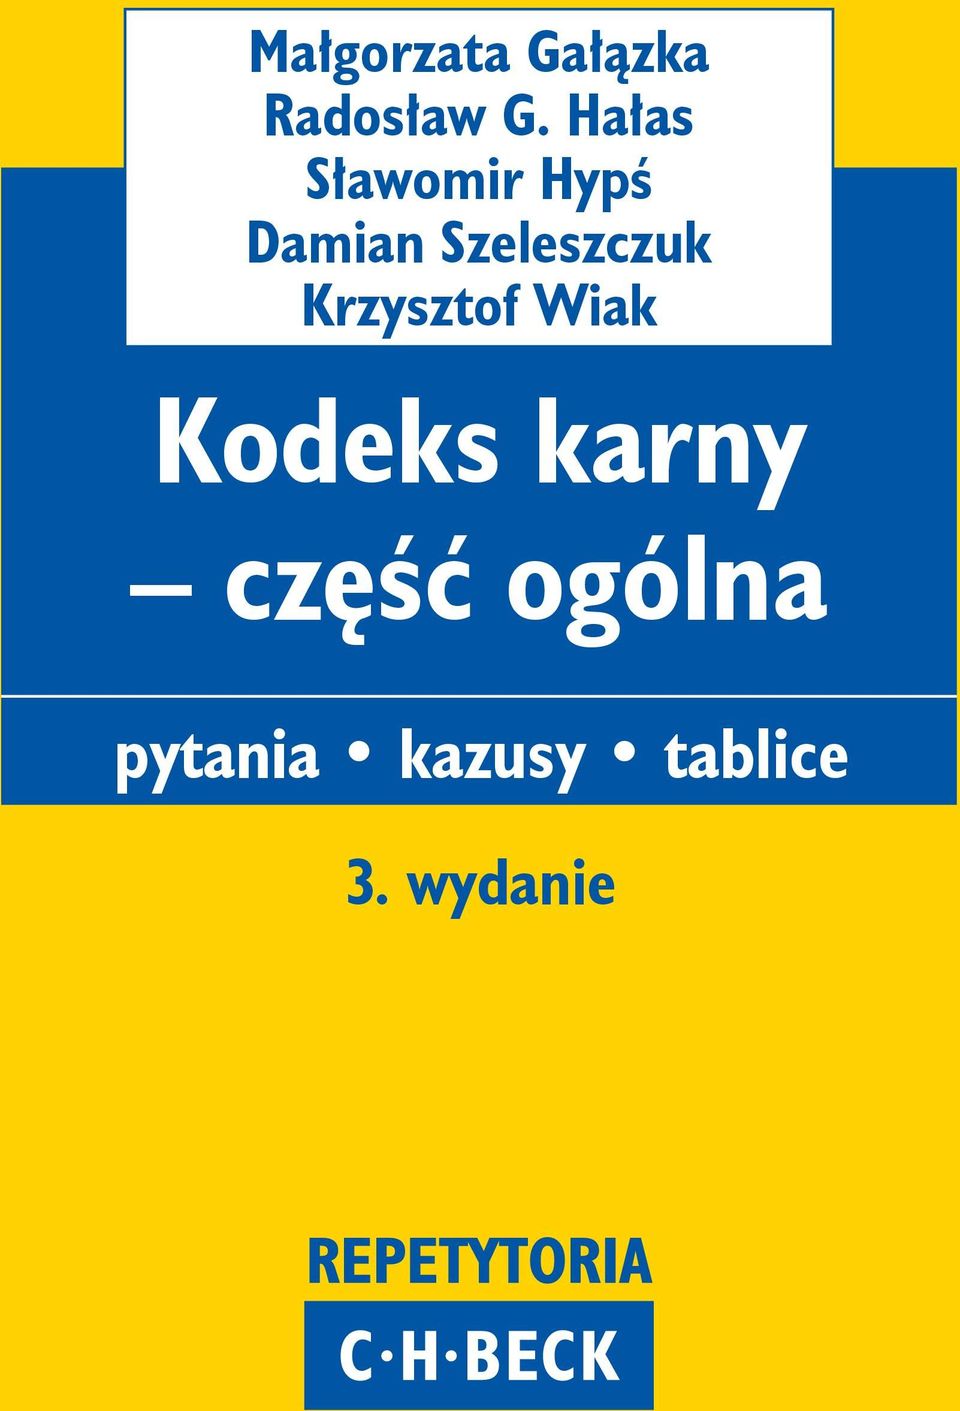 Szeleszczuk Krzysztof Wiak Kodeks